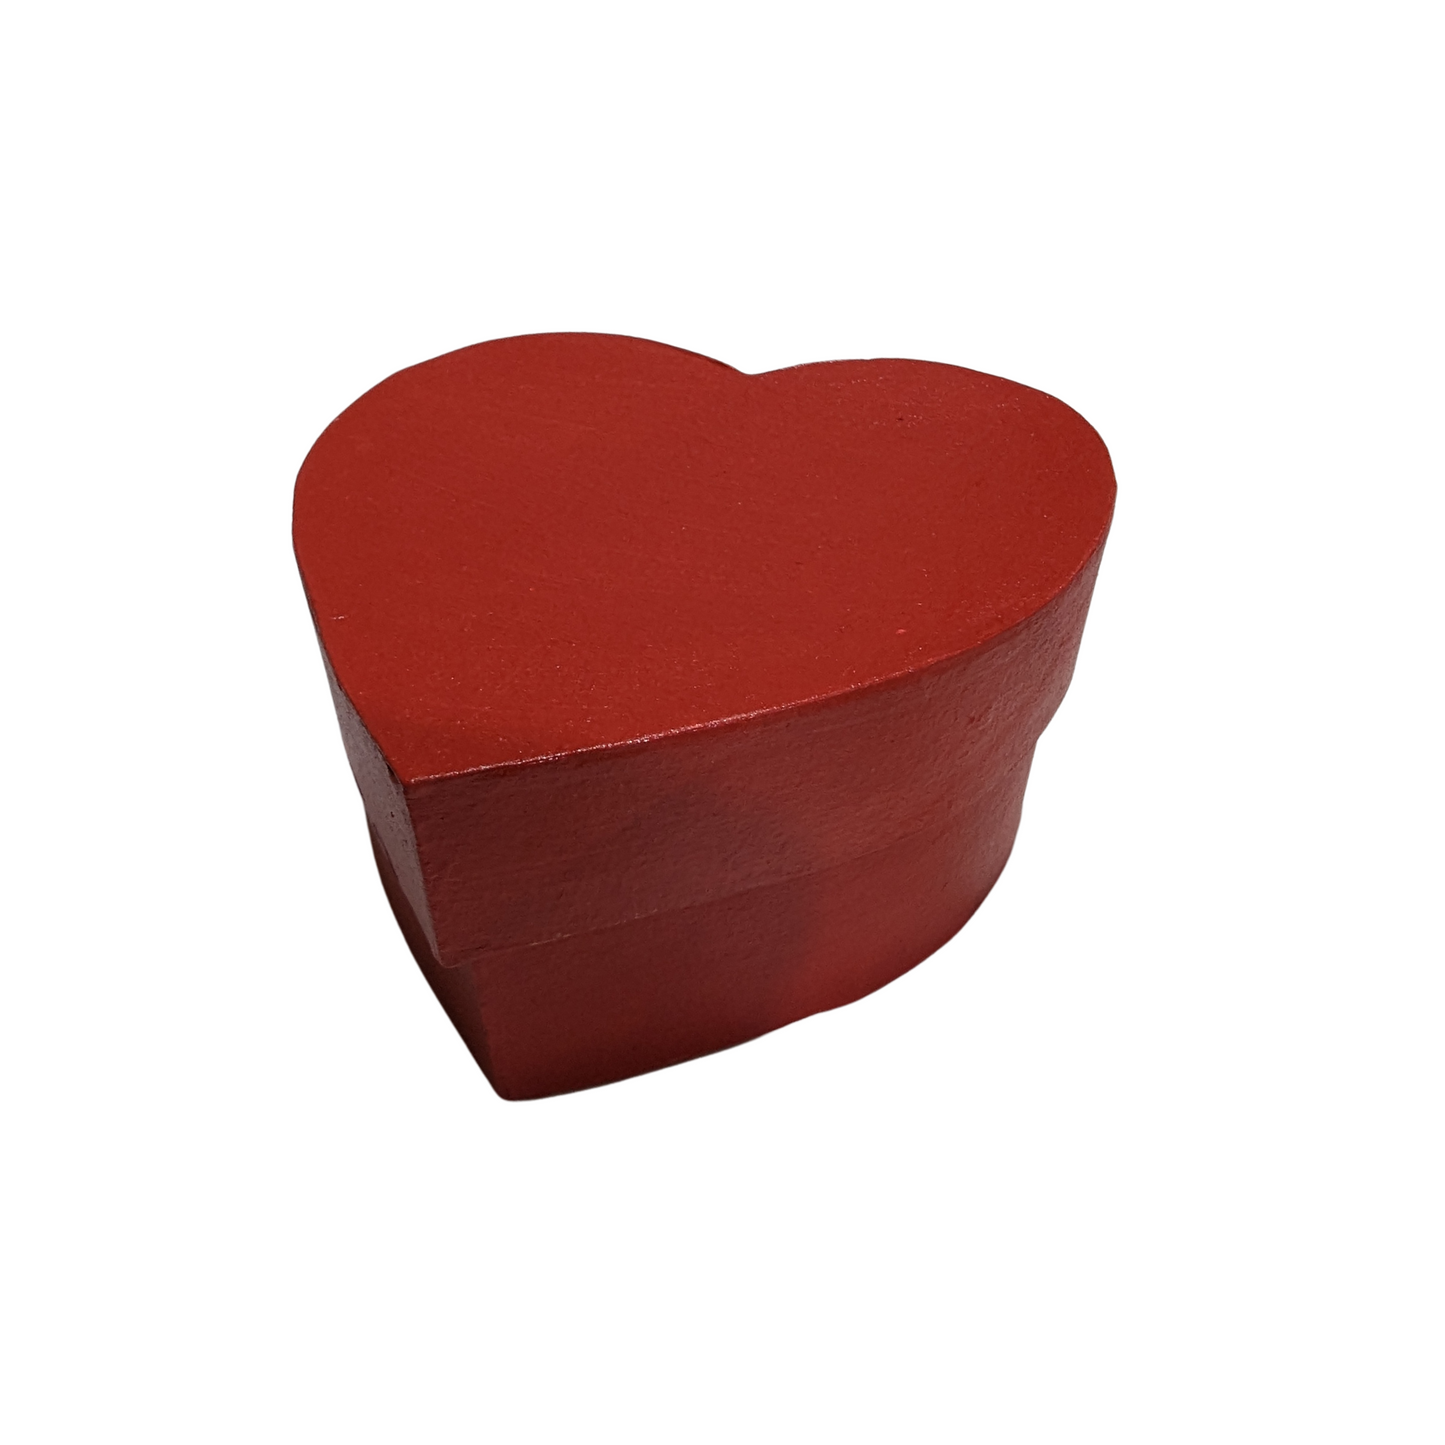 Heart Shaped Gift Box